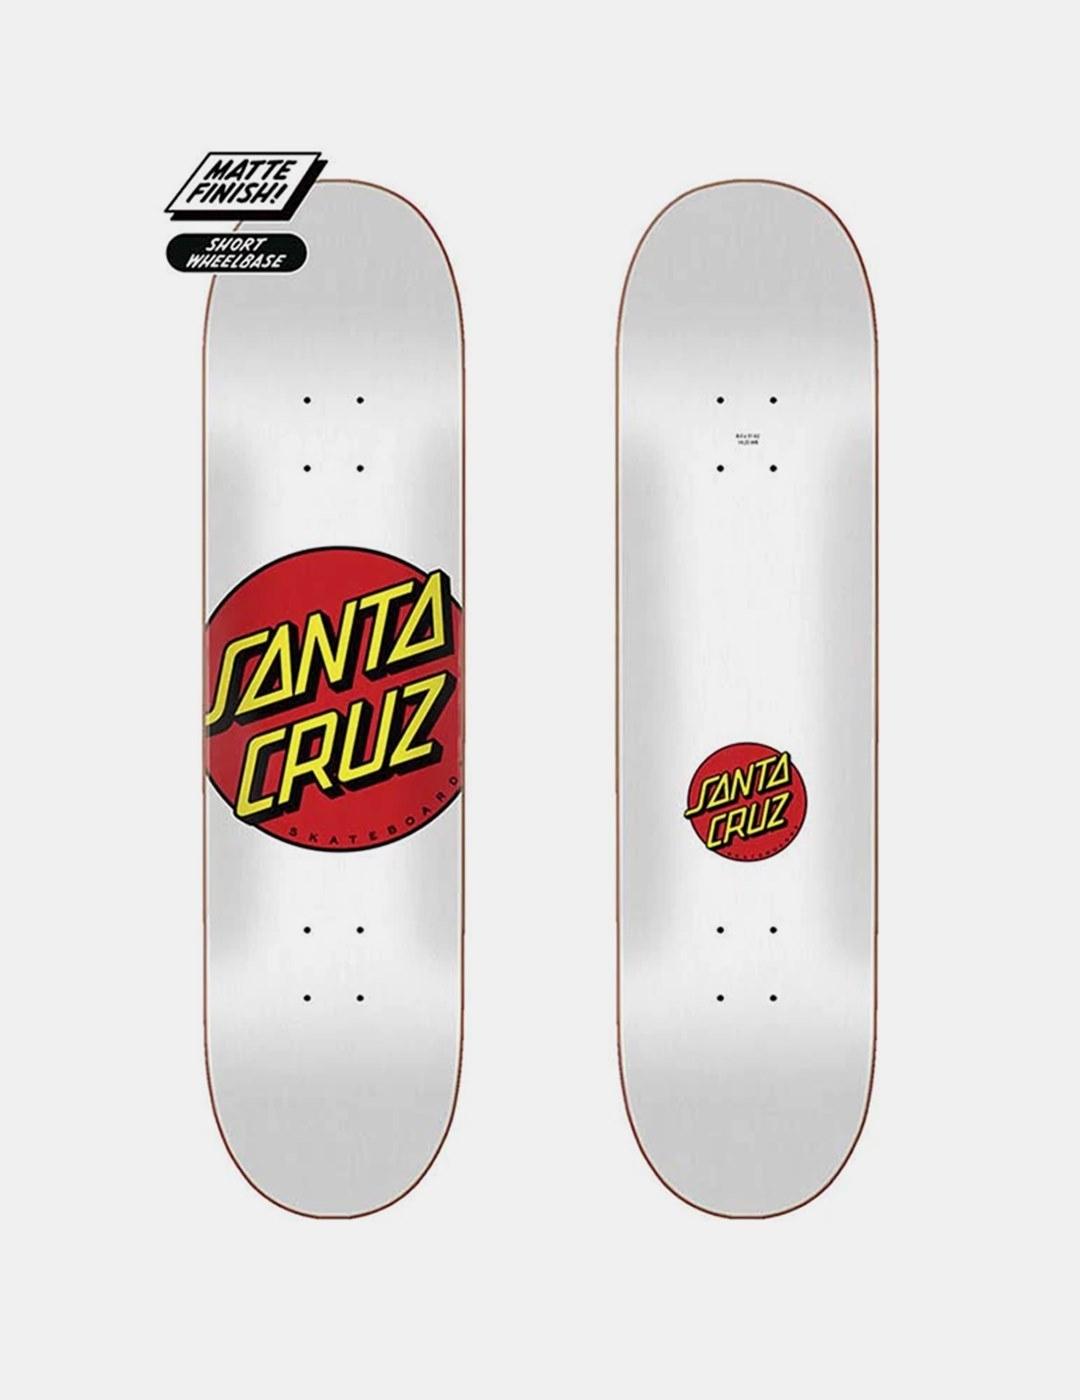 Tabla Skate Santa Cruz Classic Dot 8x31.62